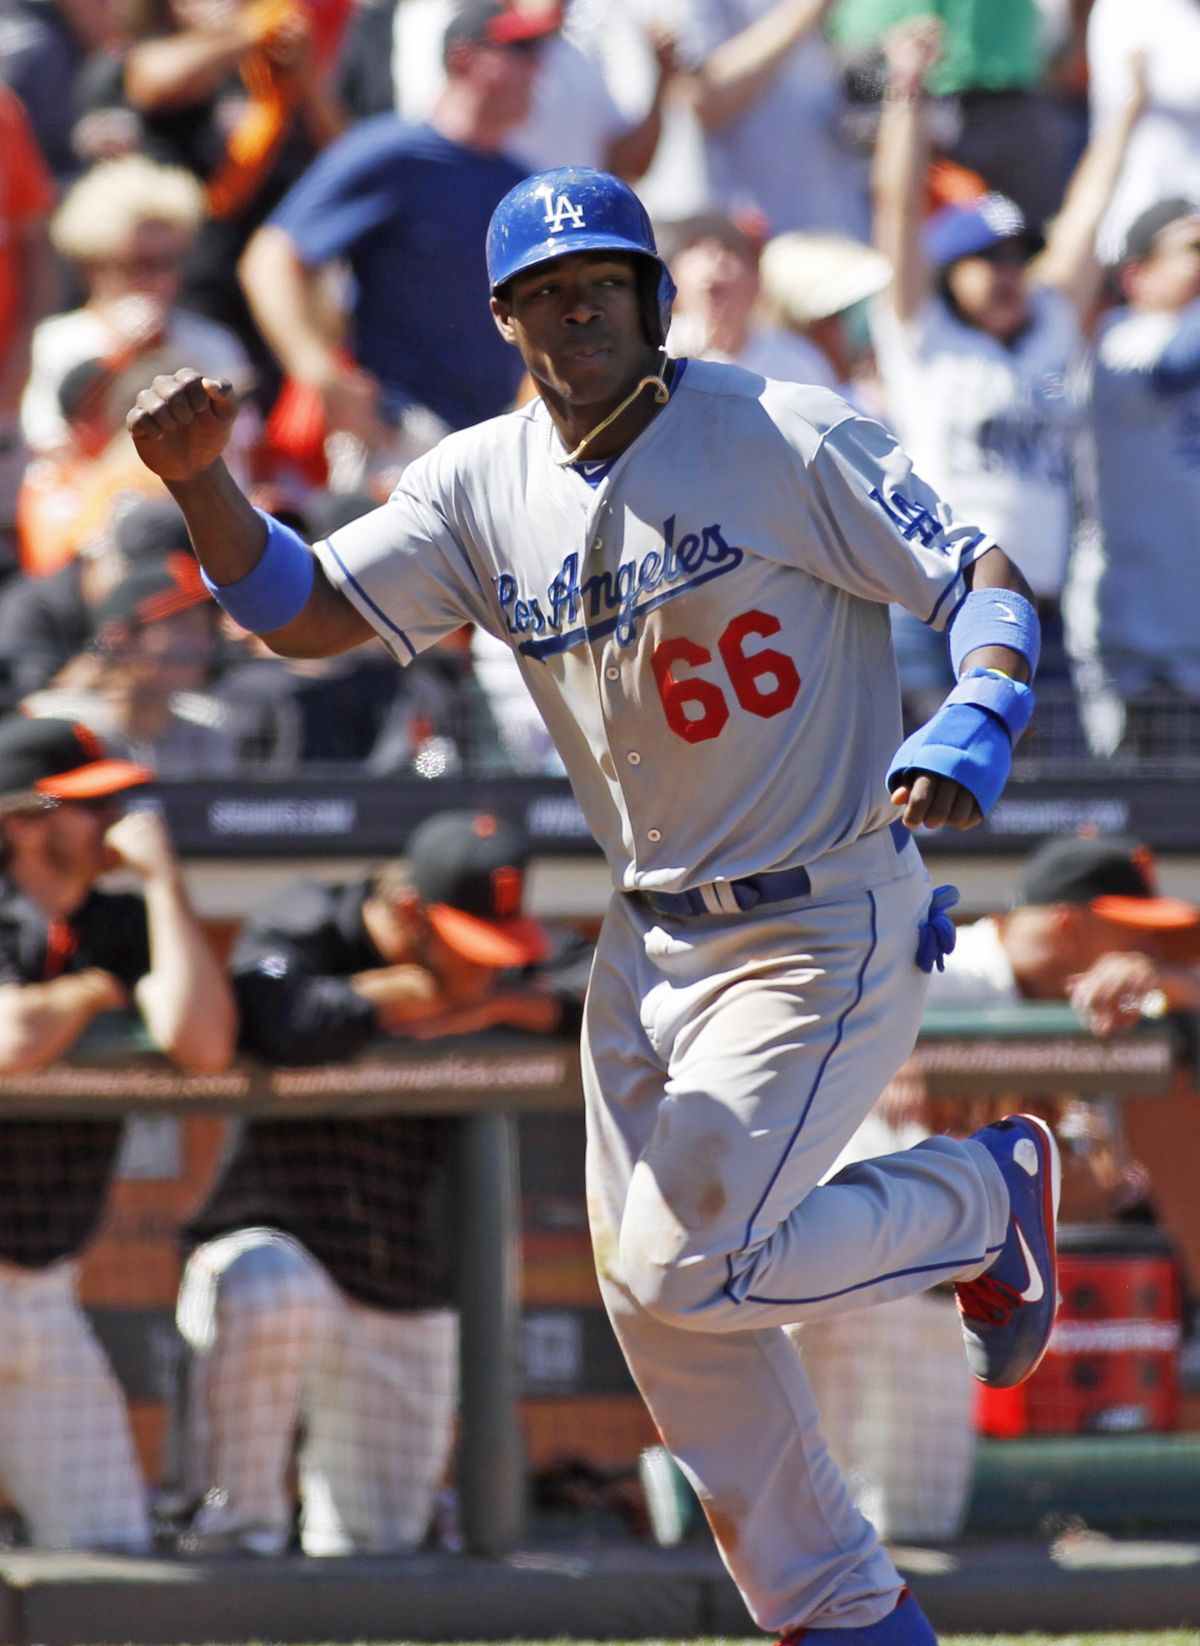 The Dodgers’ Yasiel Puig is hitting .409 this season. (Associated Press)